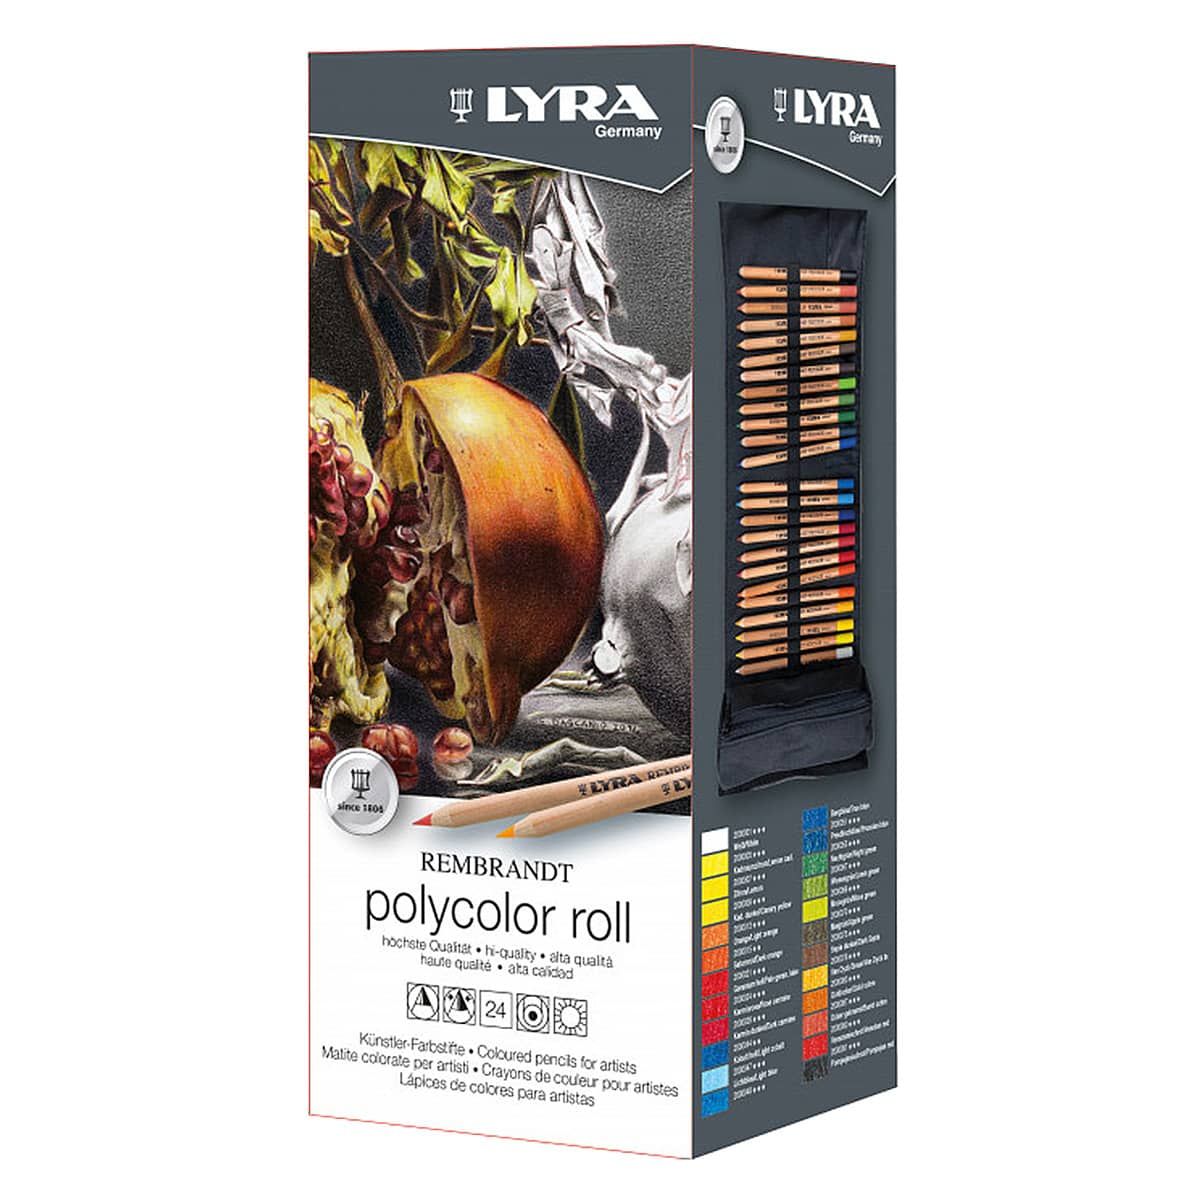 LYRA Rembrandt Polycolor Colored Pencil Sets